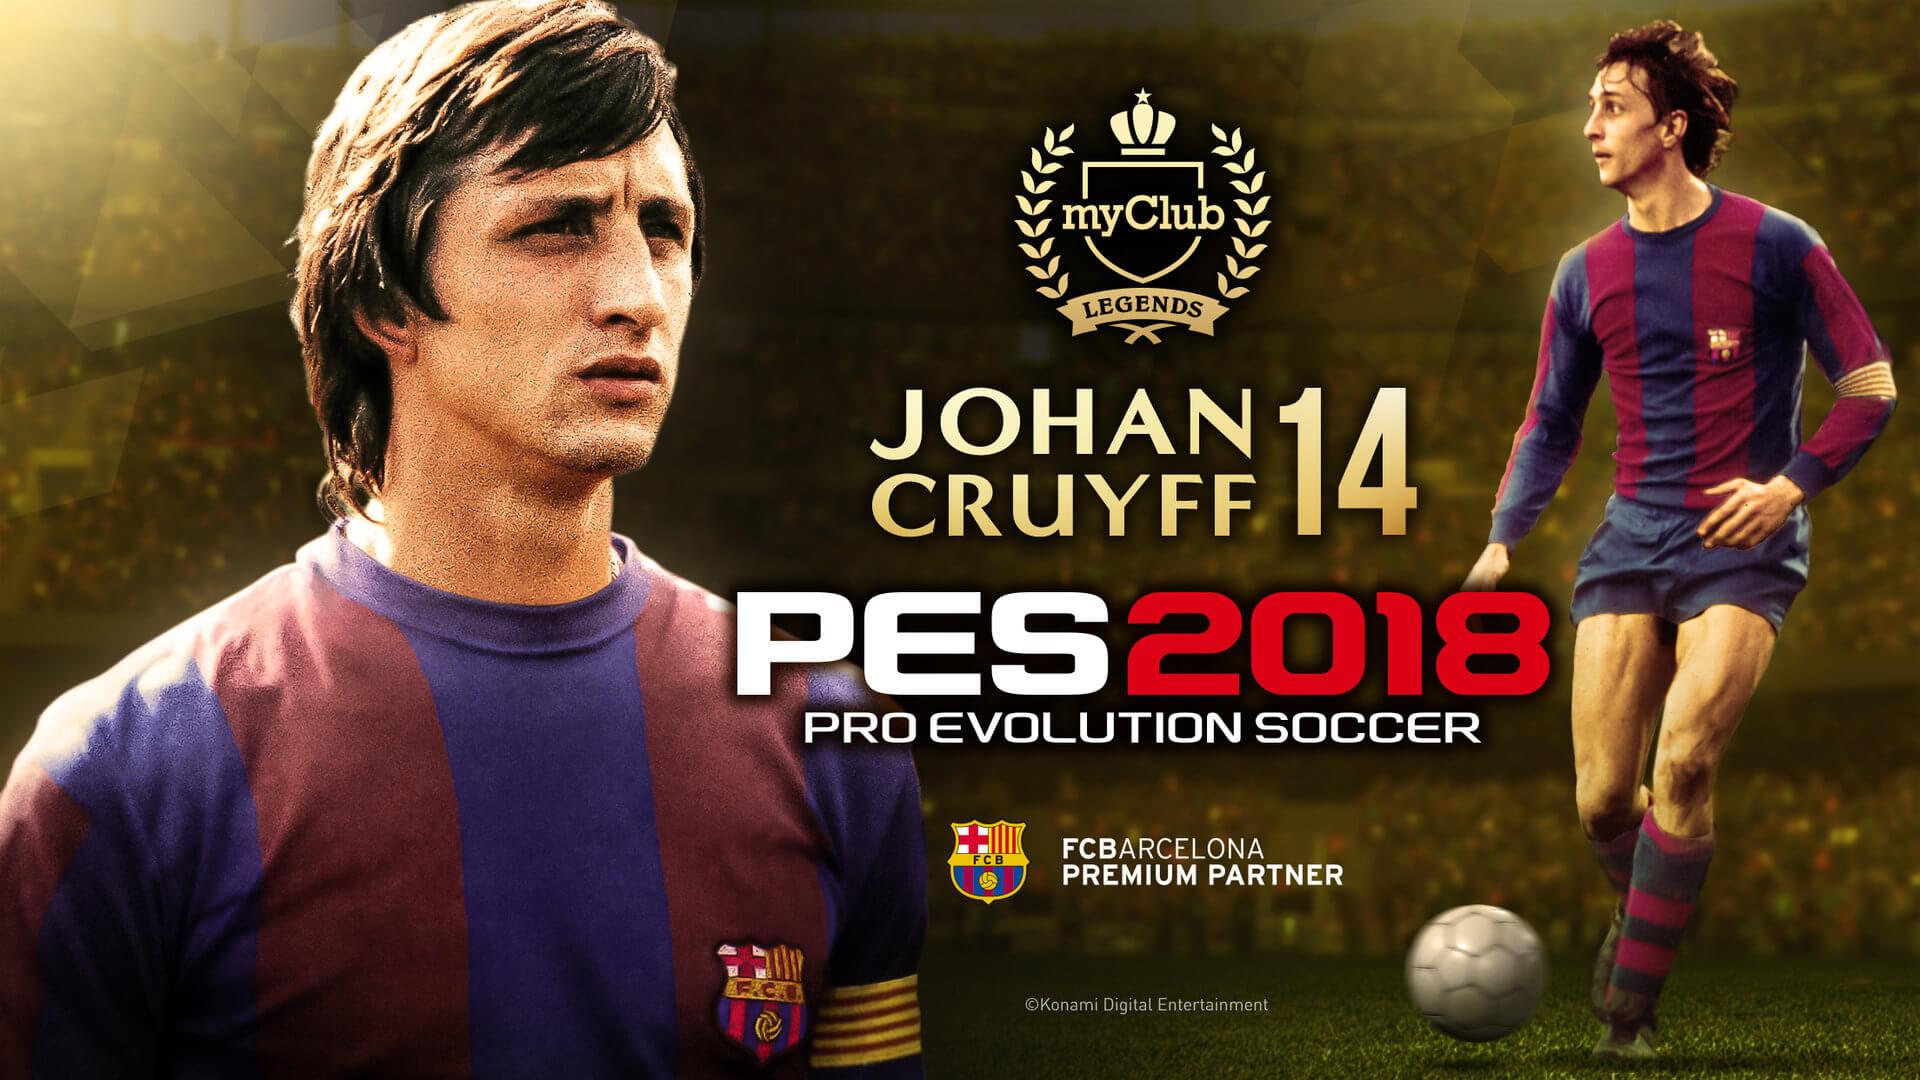 Johan Cruyff Is Coming To Pro Evolution Soccer 2018